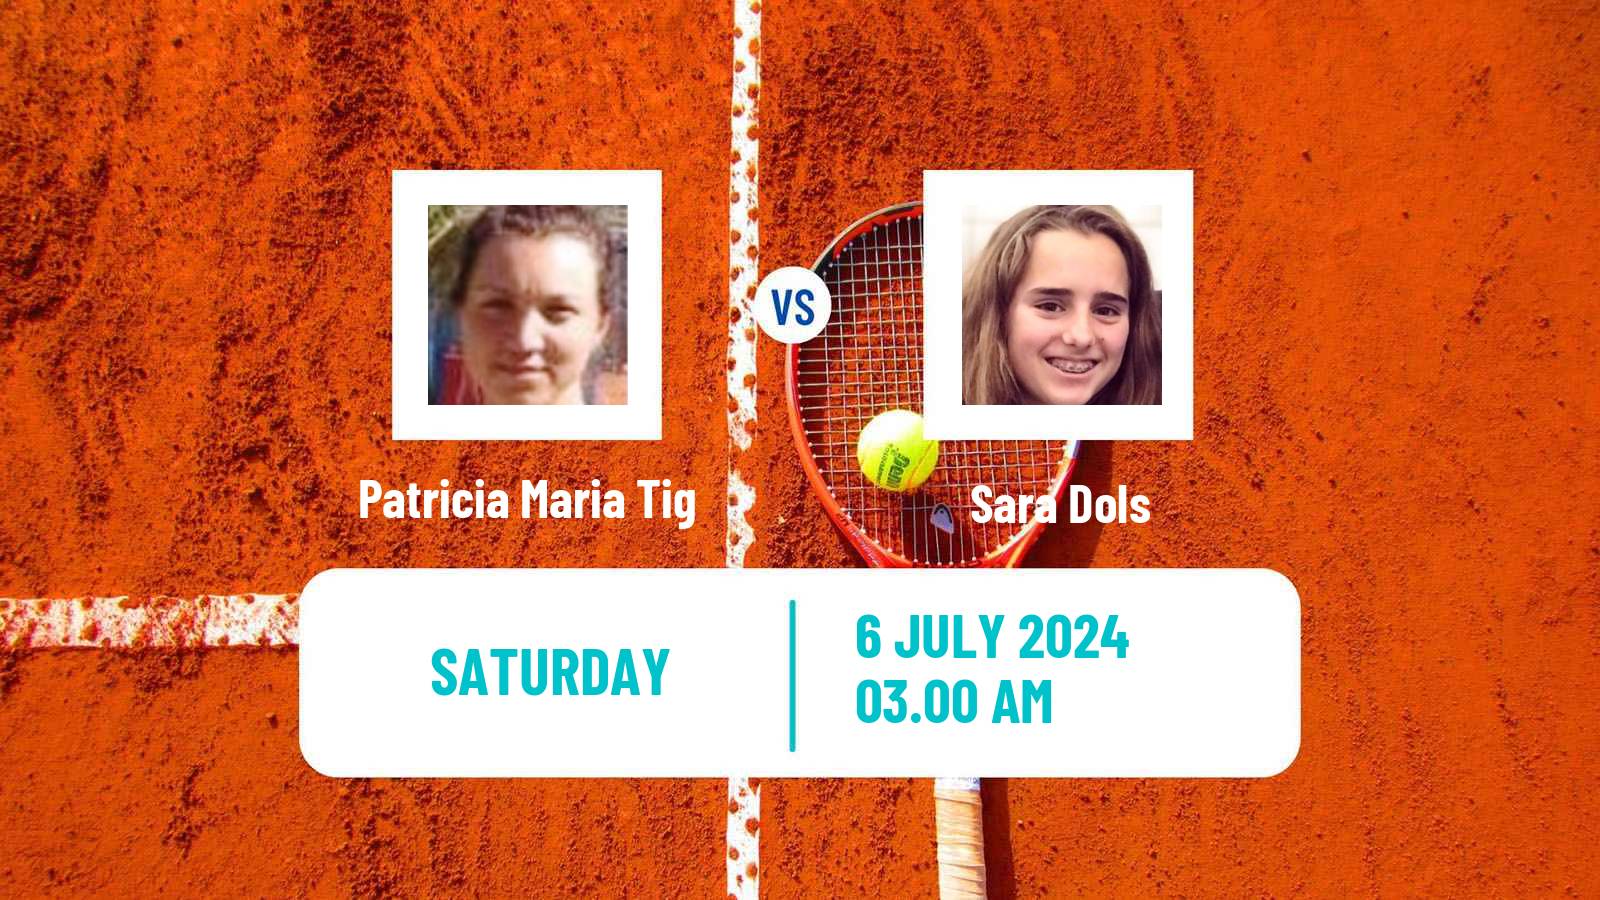 Tennis ITF W15 Galati 2 Women Patricia Maria Tig - Sara Dols